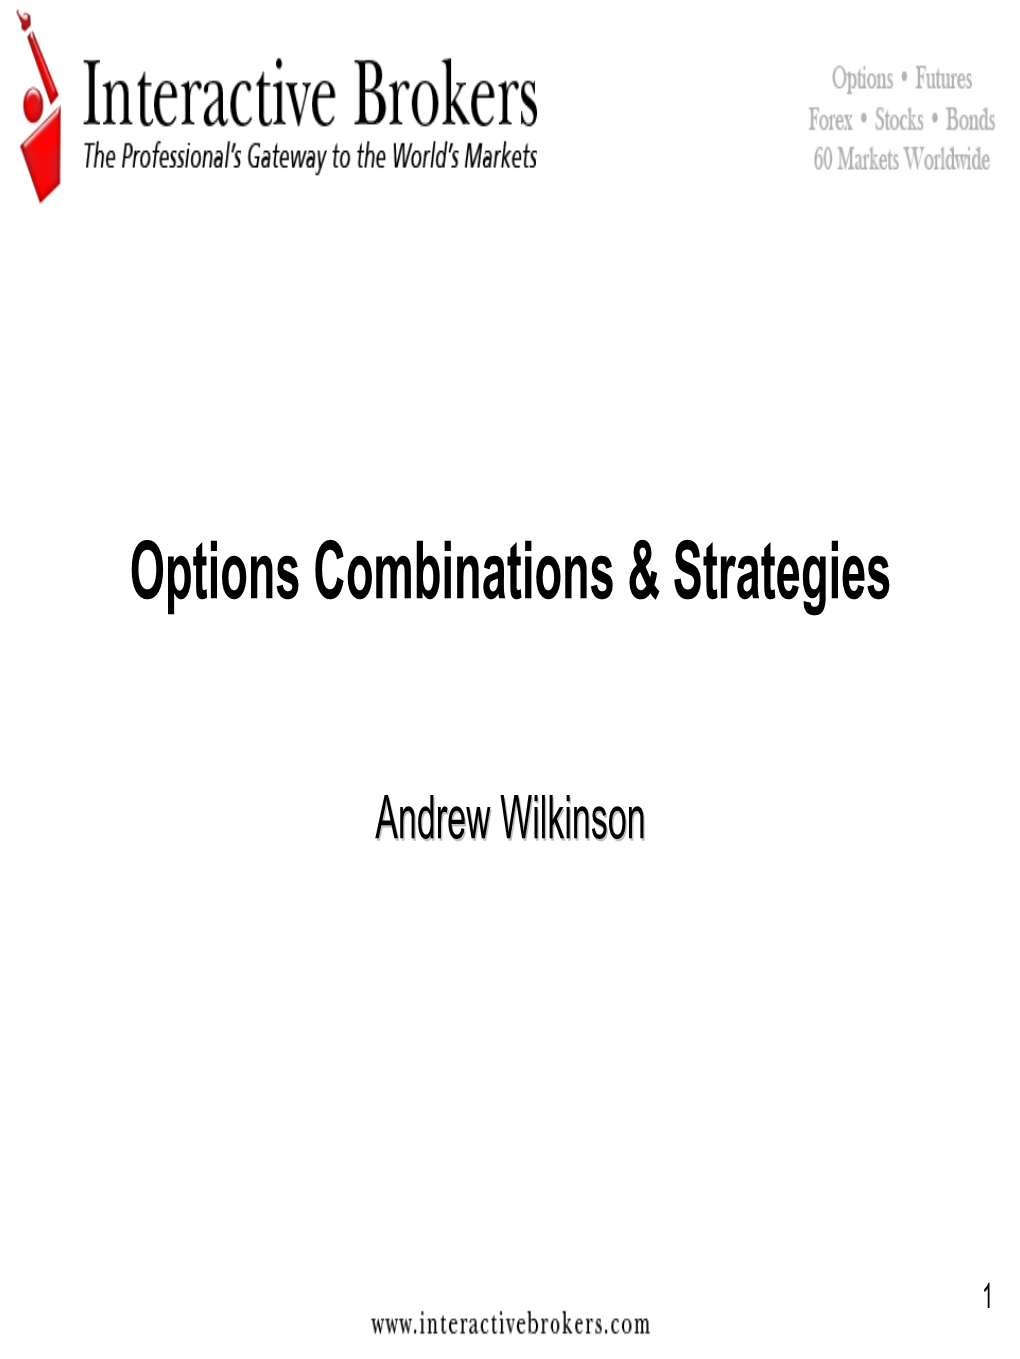 Options Combinations & Strategies